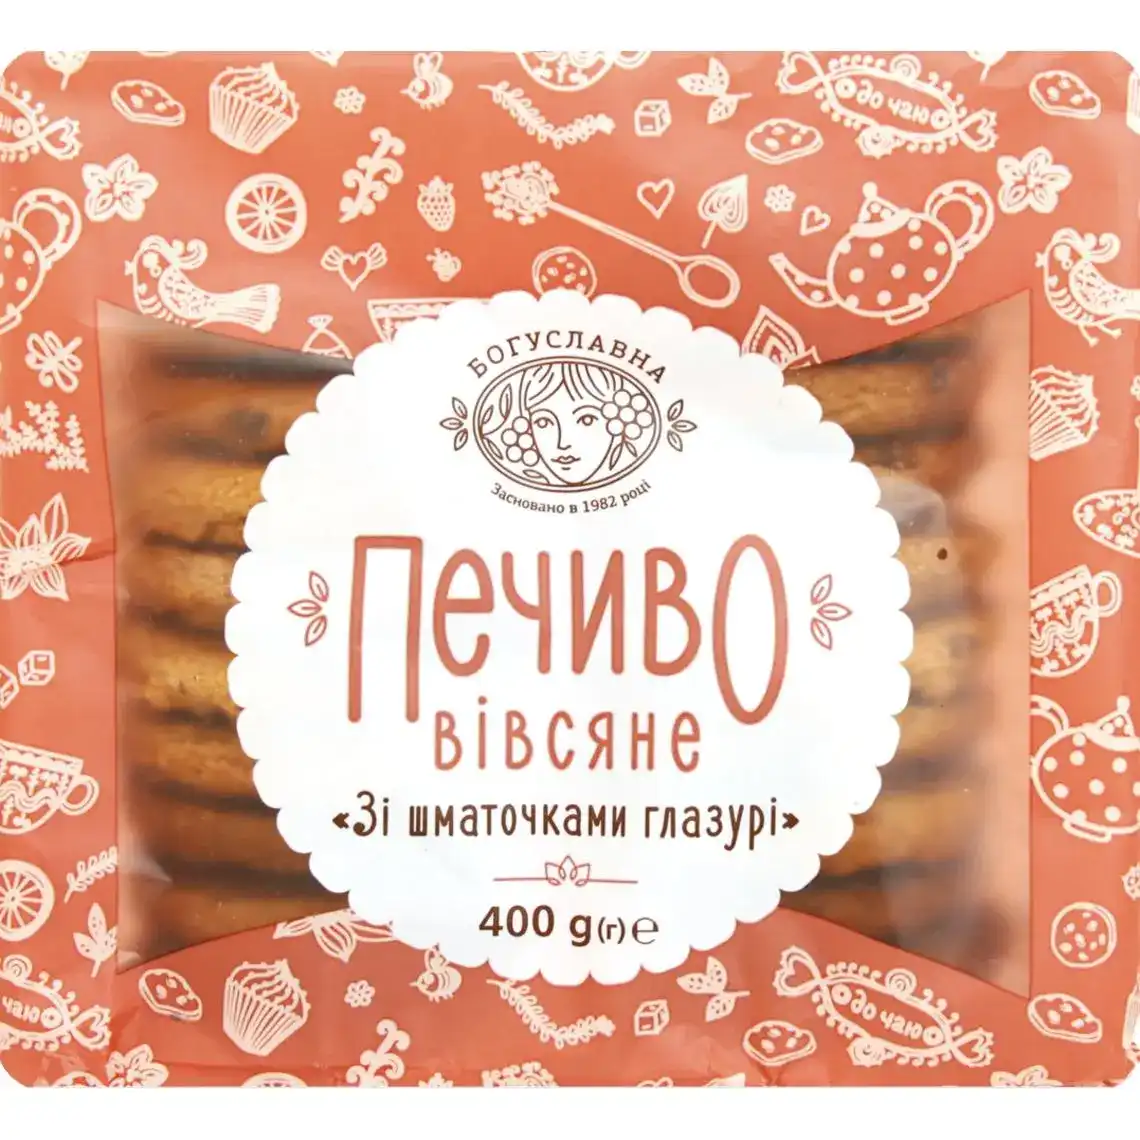 Печиво Богуславна здобне вівсяне з шматочками глазурі 400 г